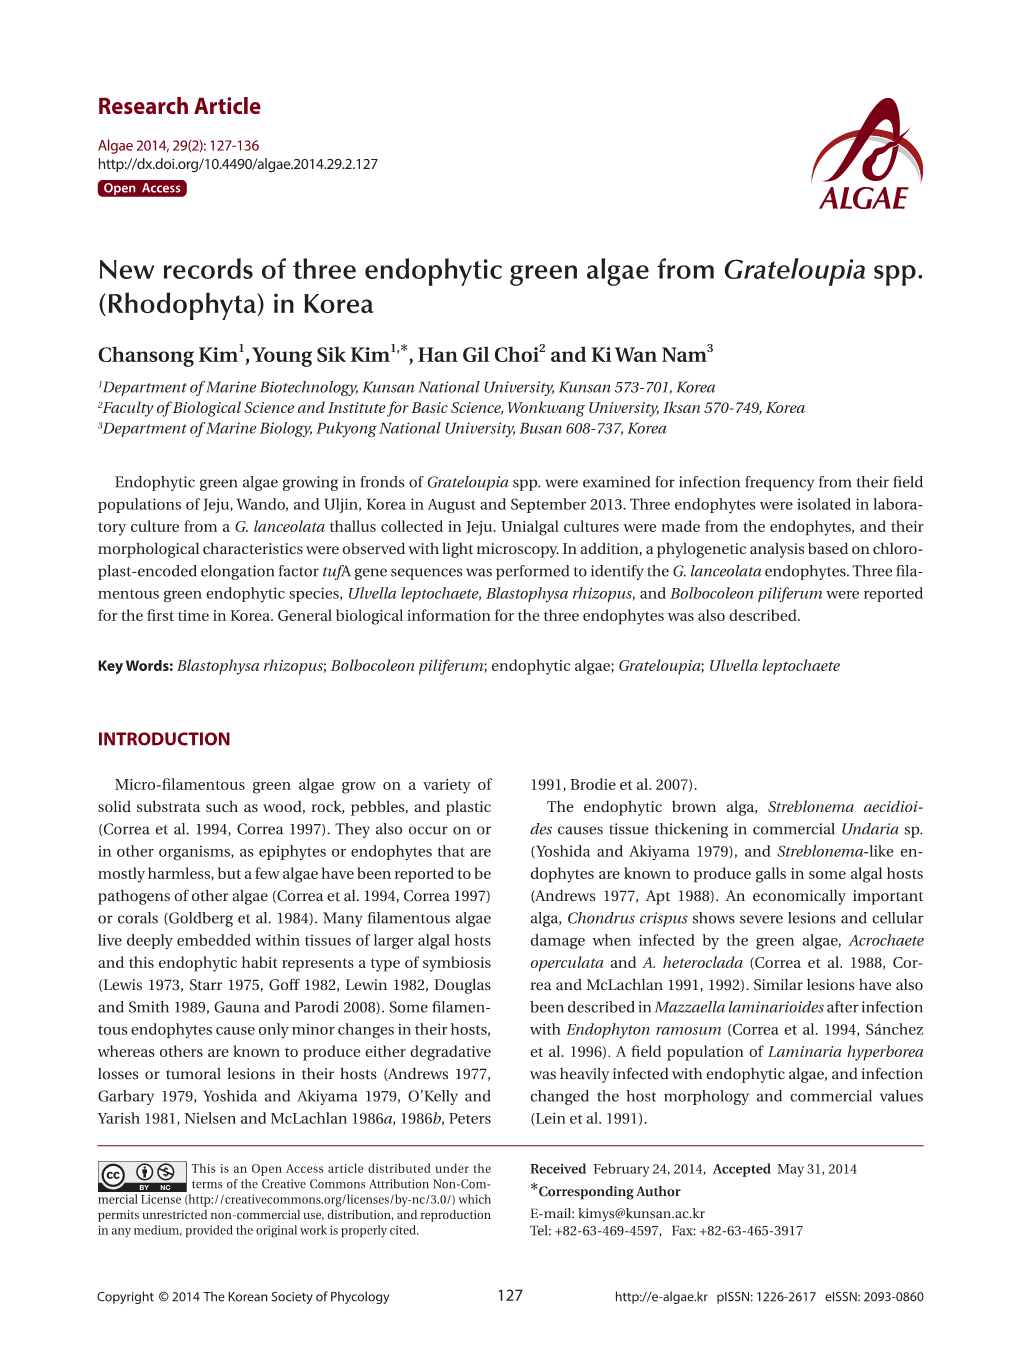 New Records of Three Endophytic Green Algae from Grateloupia Spp